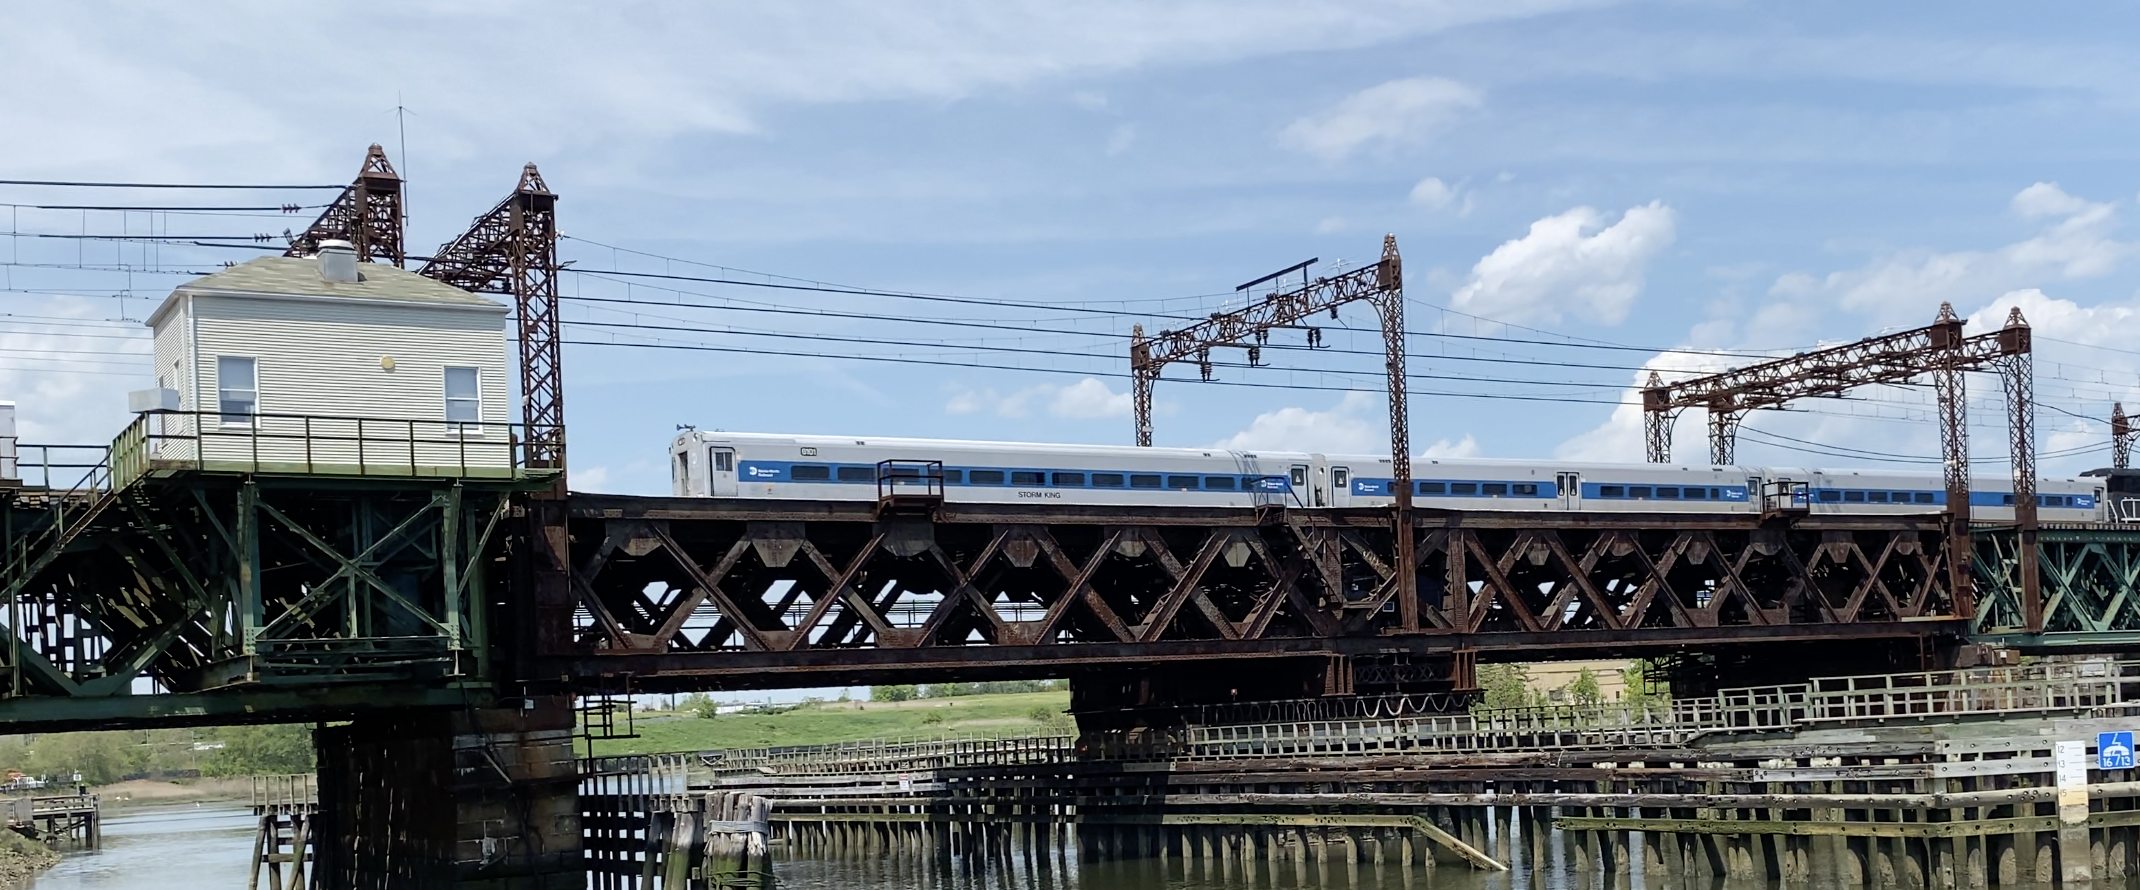 A train on a bridge